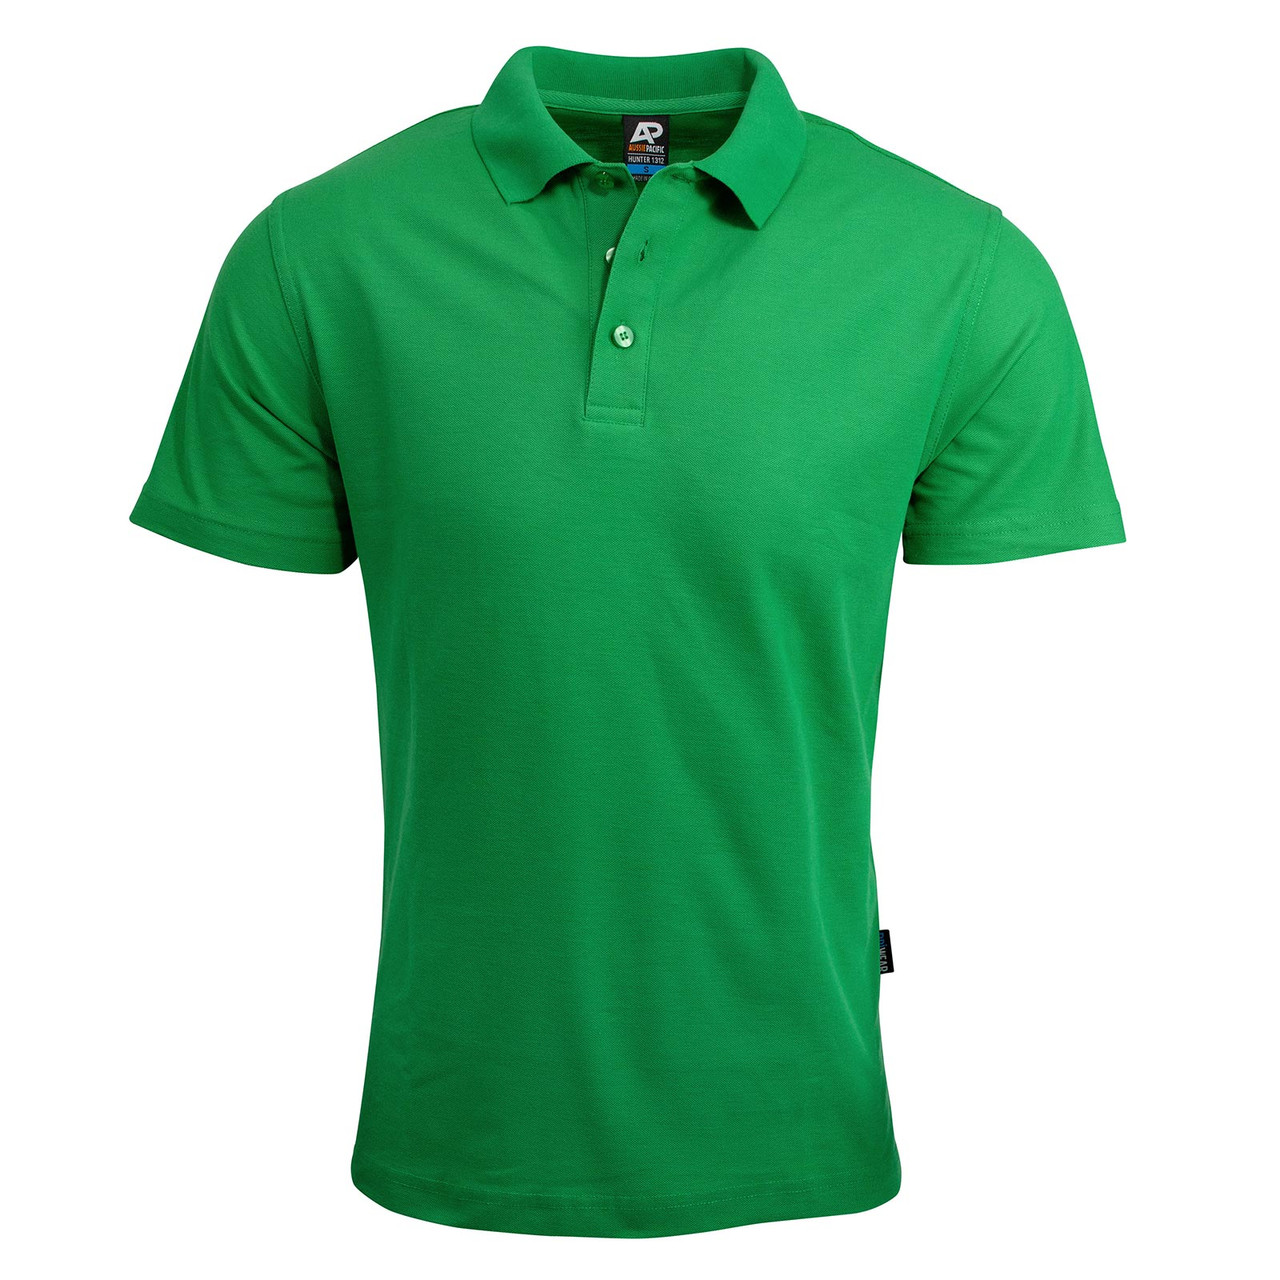 Quality Polyester Cotton Polo Shirts, Poly cotton Polo Shirts for men